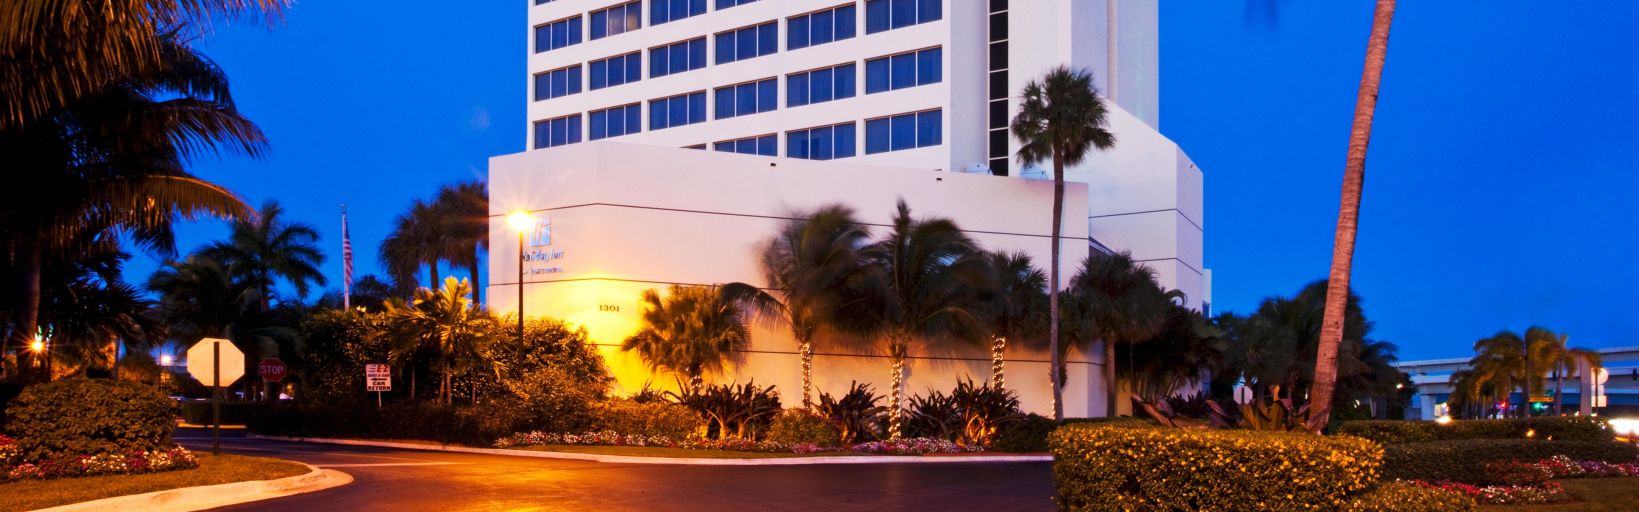 Hotel Palm Beach Airport 2018 World S Best Hotels